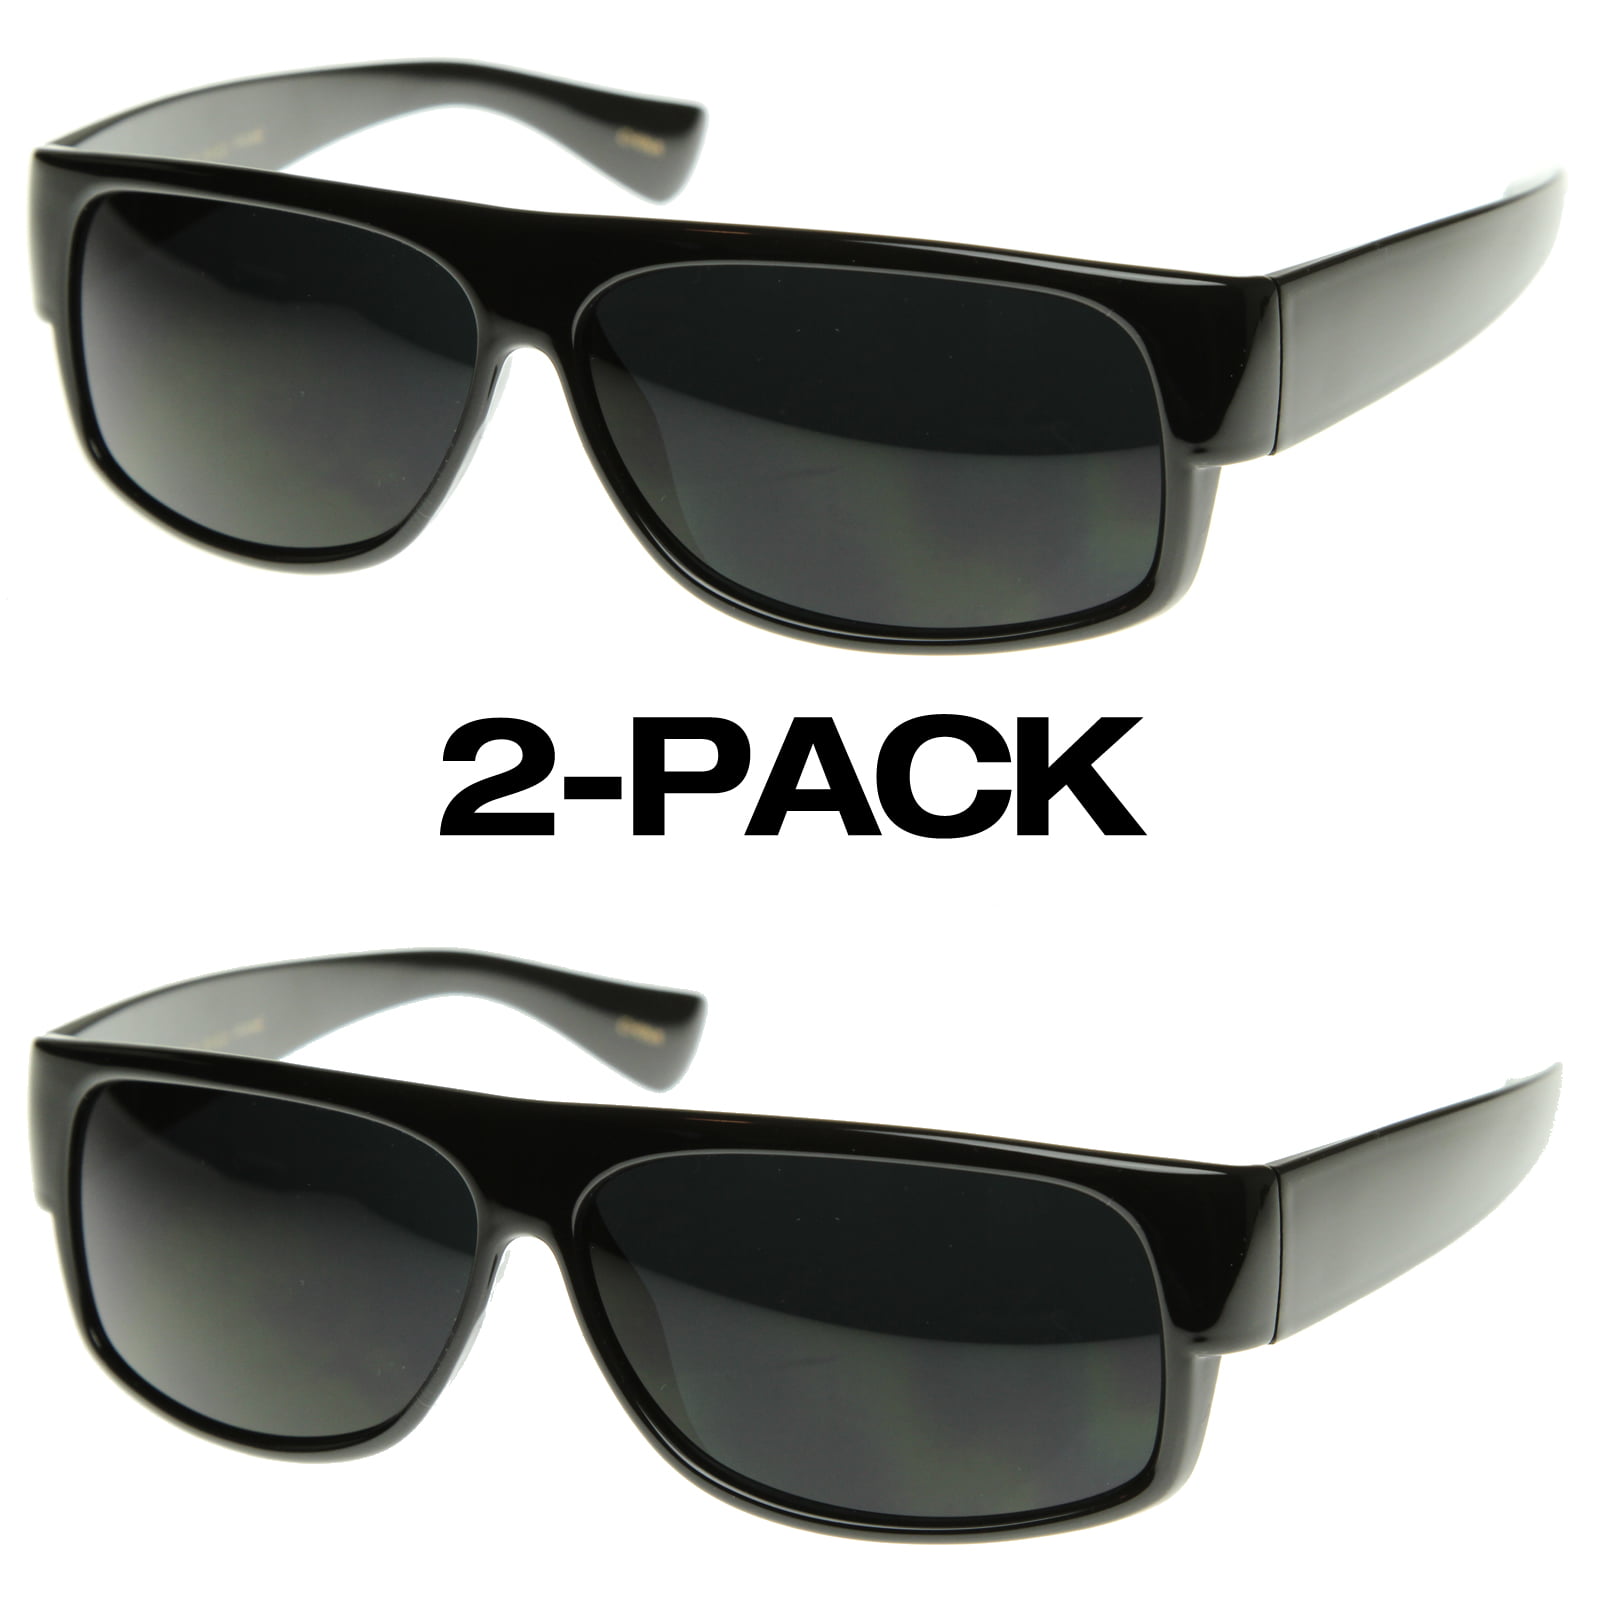 BLACK OG Mad Dogger Locs Sunglasses Super Dark Lens motorcycle Shades mens 